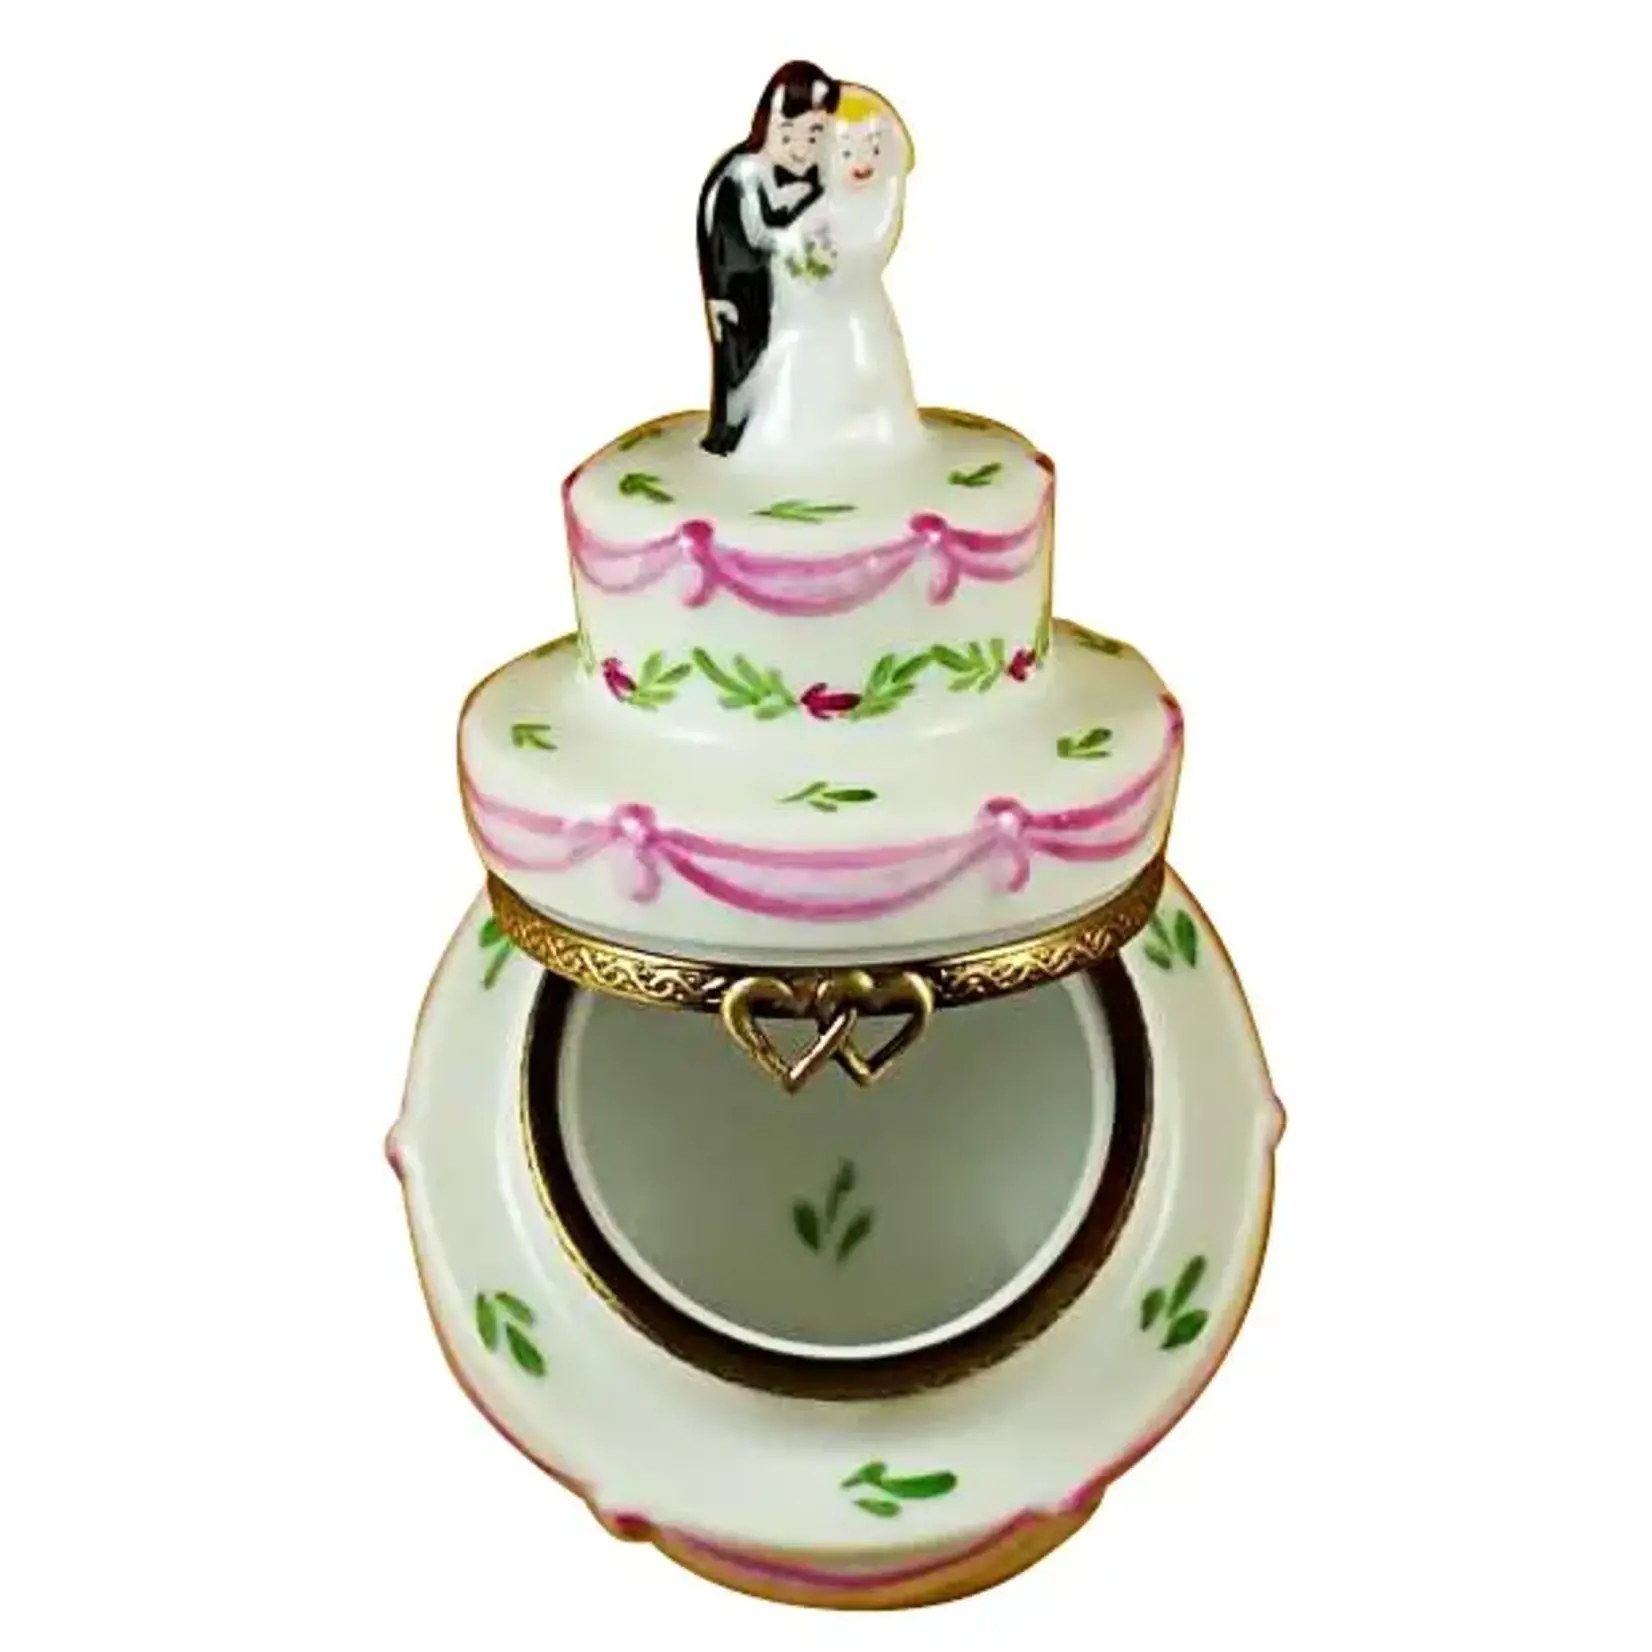 Rochard Limoges Wedding Cake w/Bride & Groom